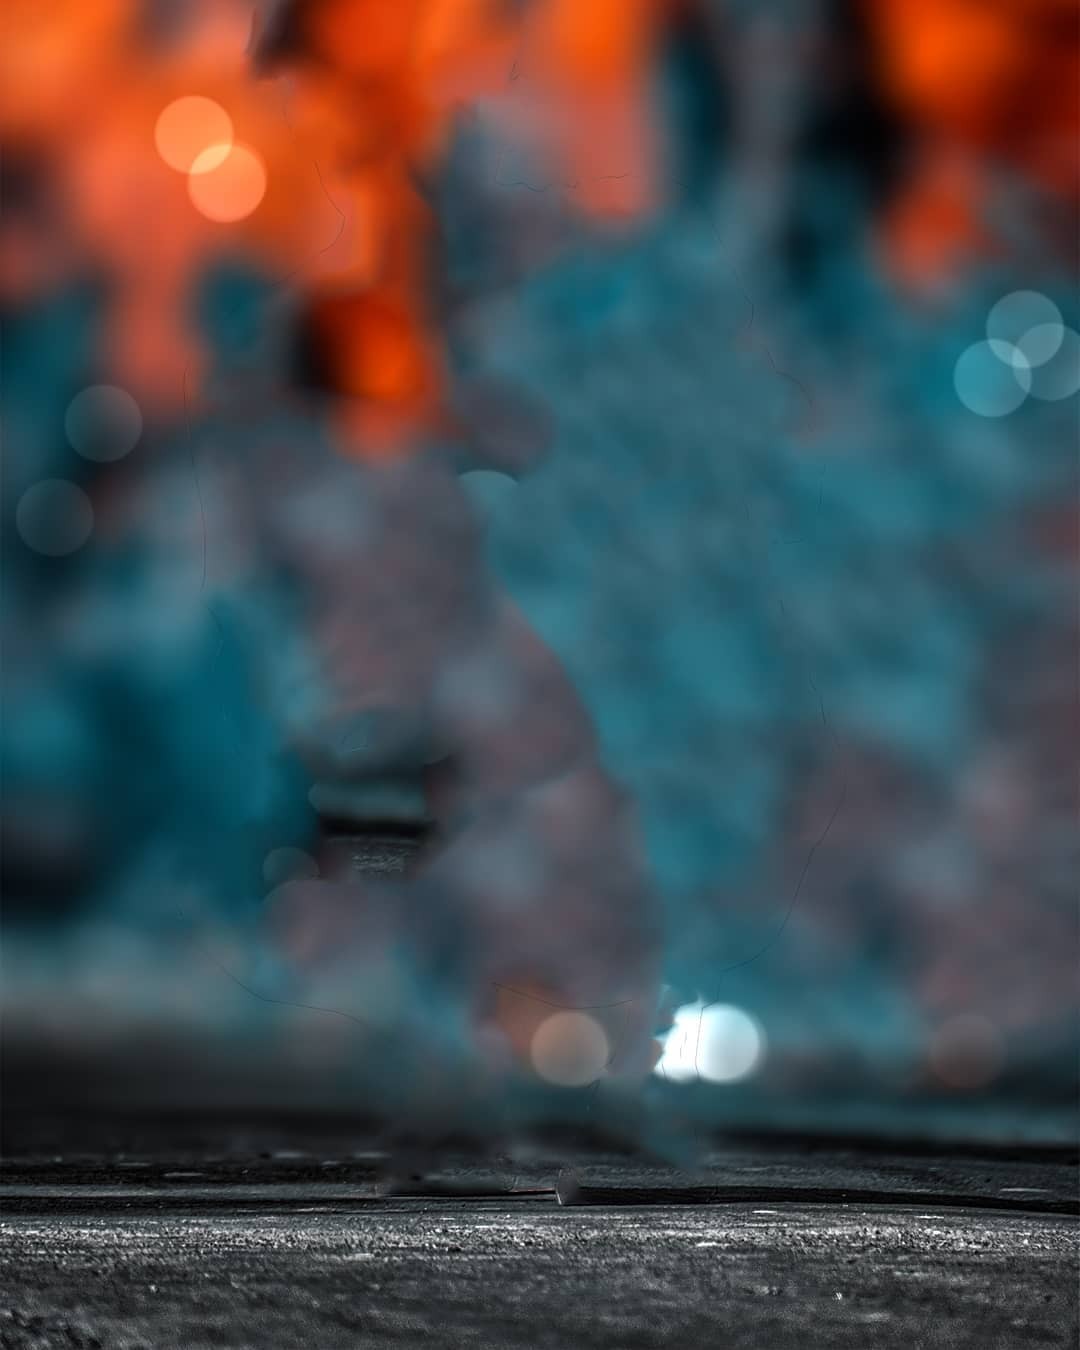  Blur CB Editing Background Full HD Download For Picsart | CBEditz